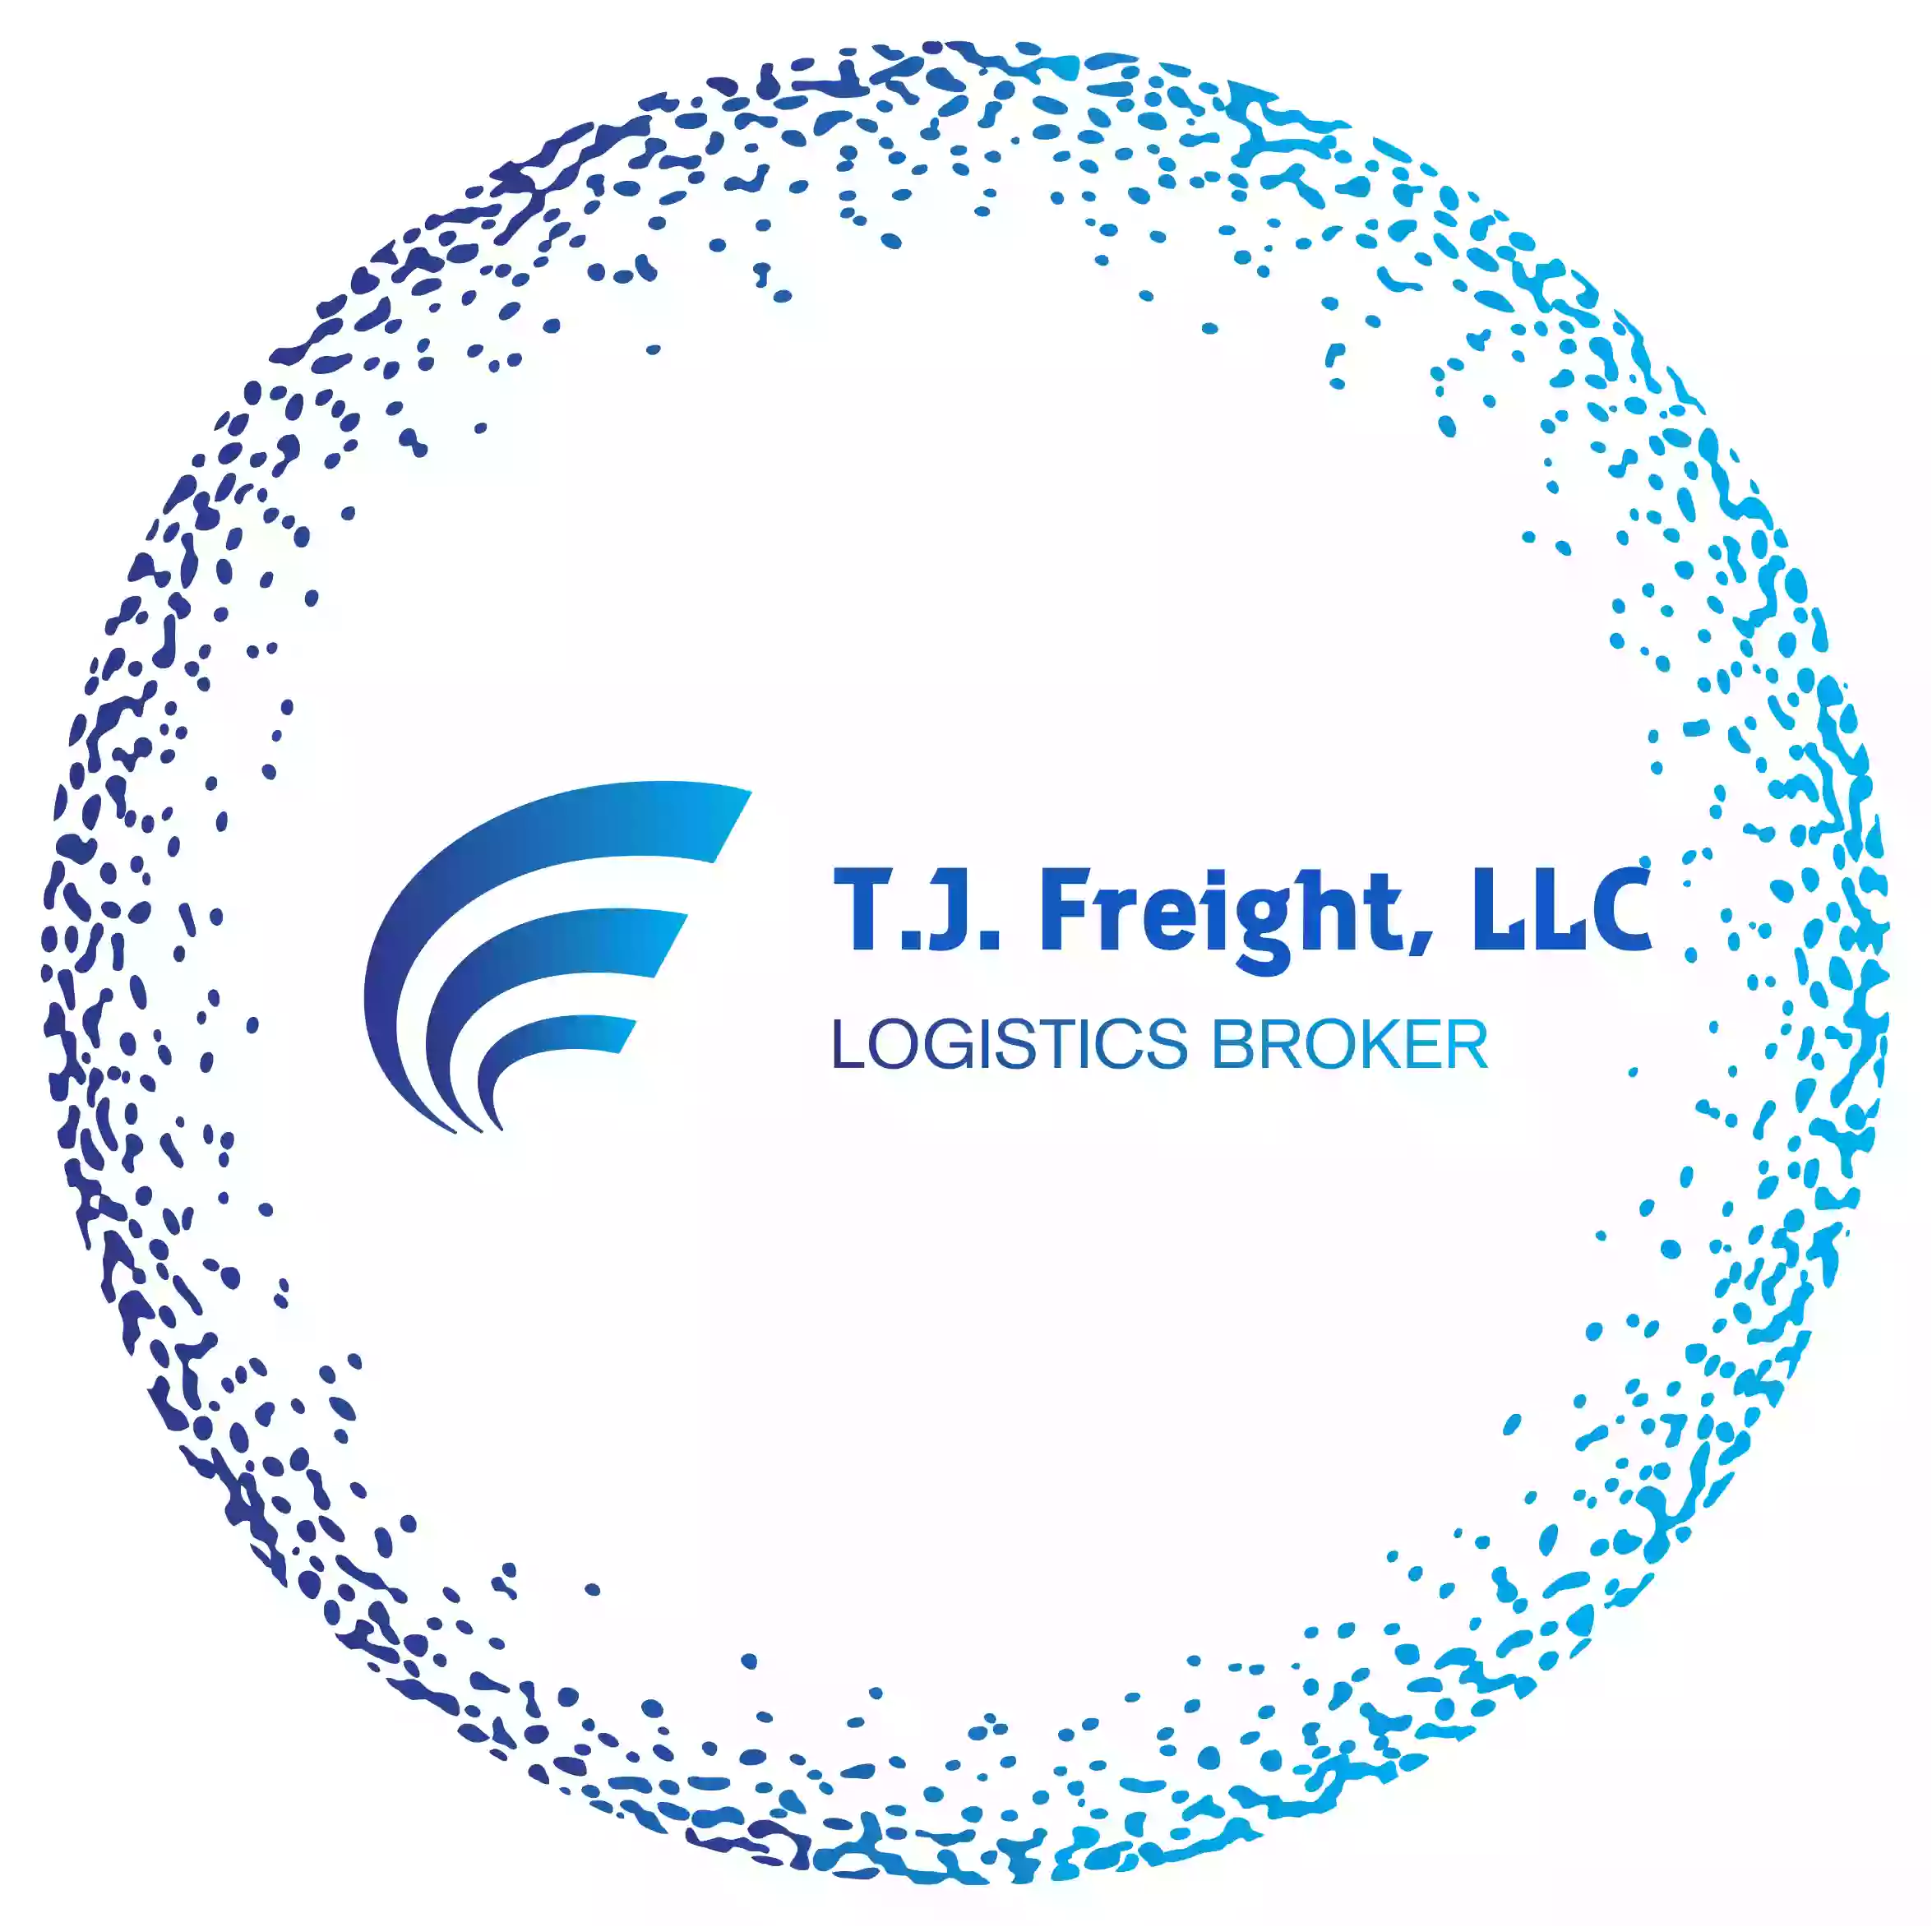 T.J. Freight, LLC